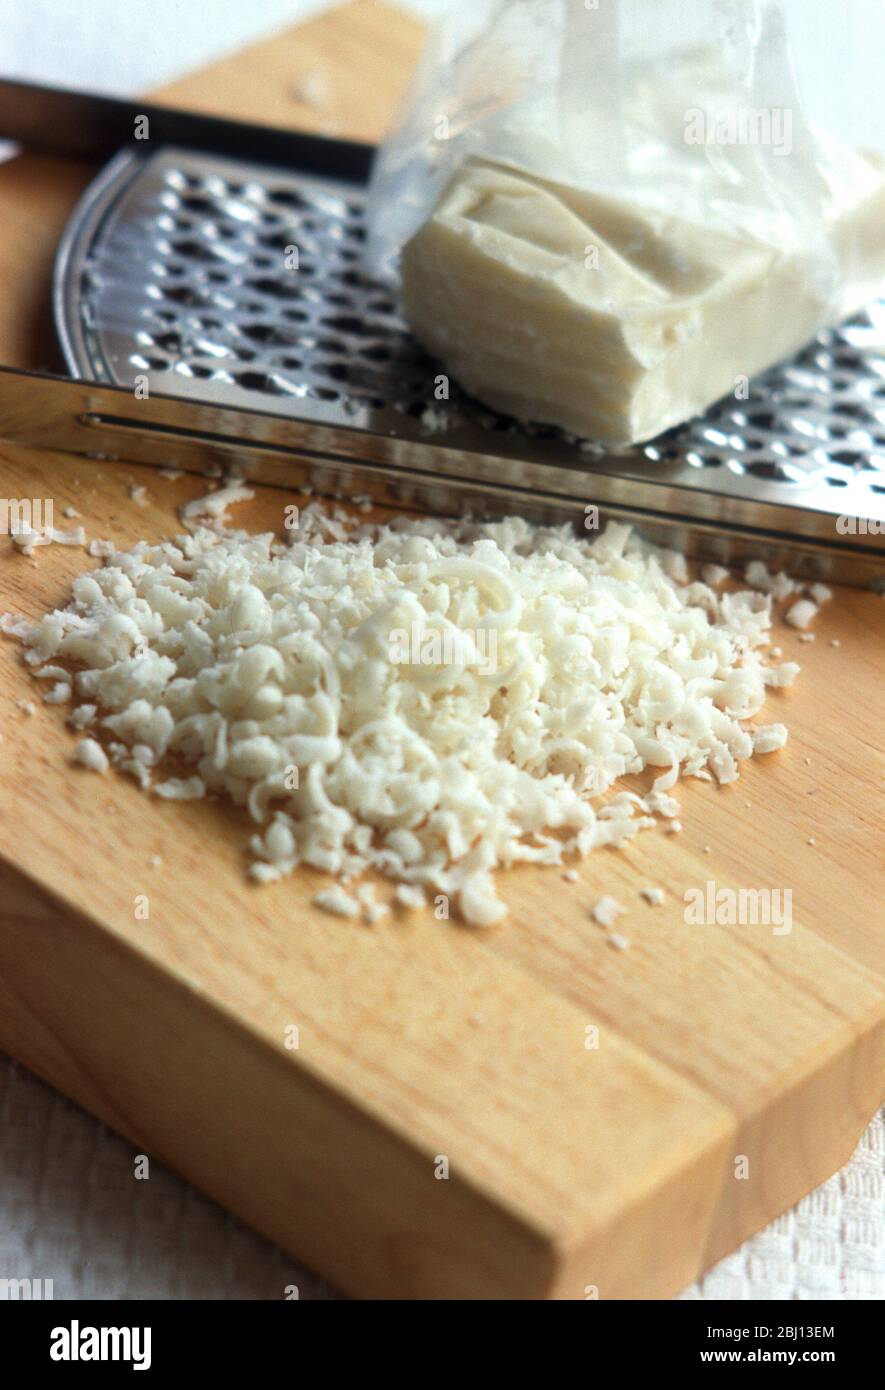 Raspel creamed Coconut - Stockfoto